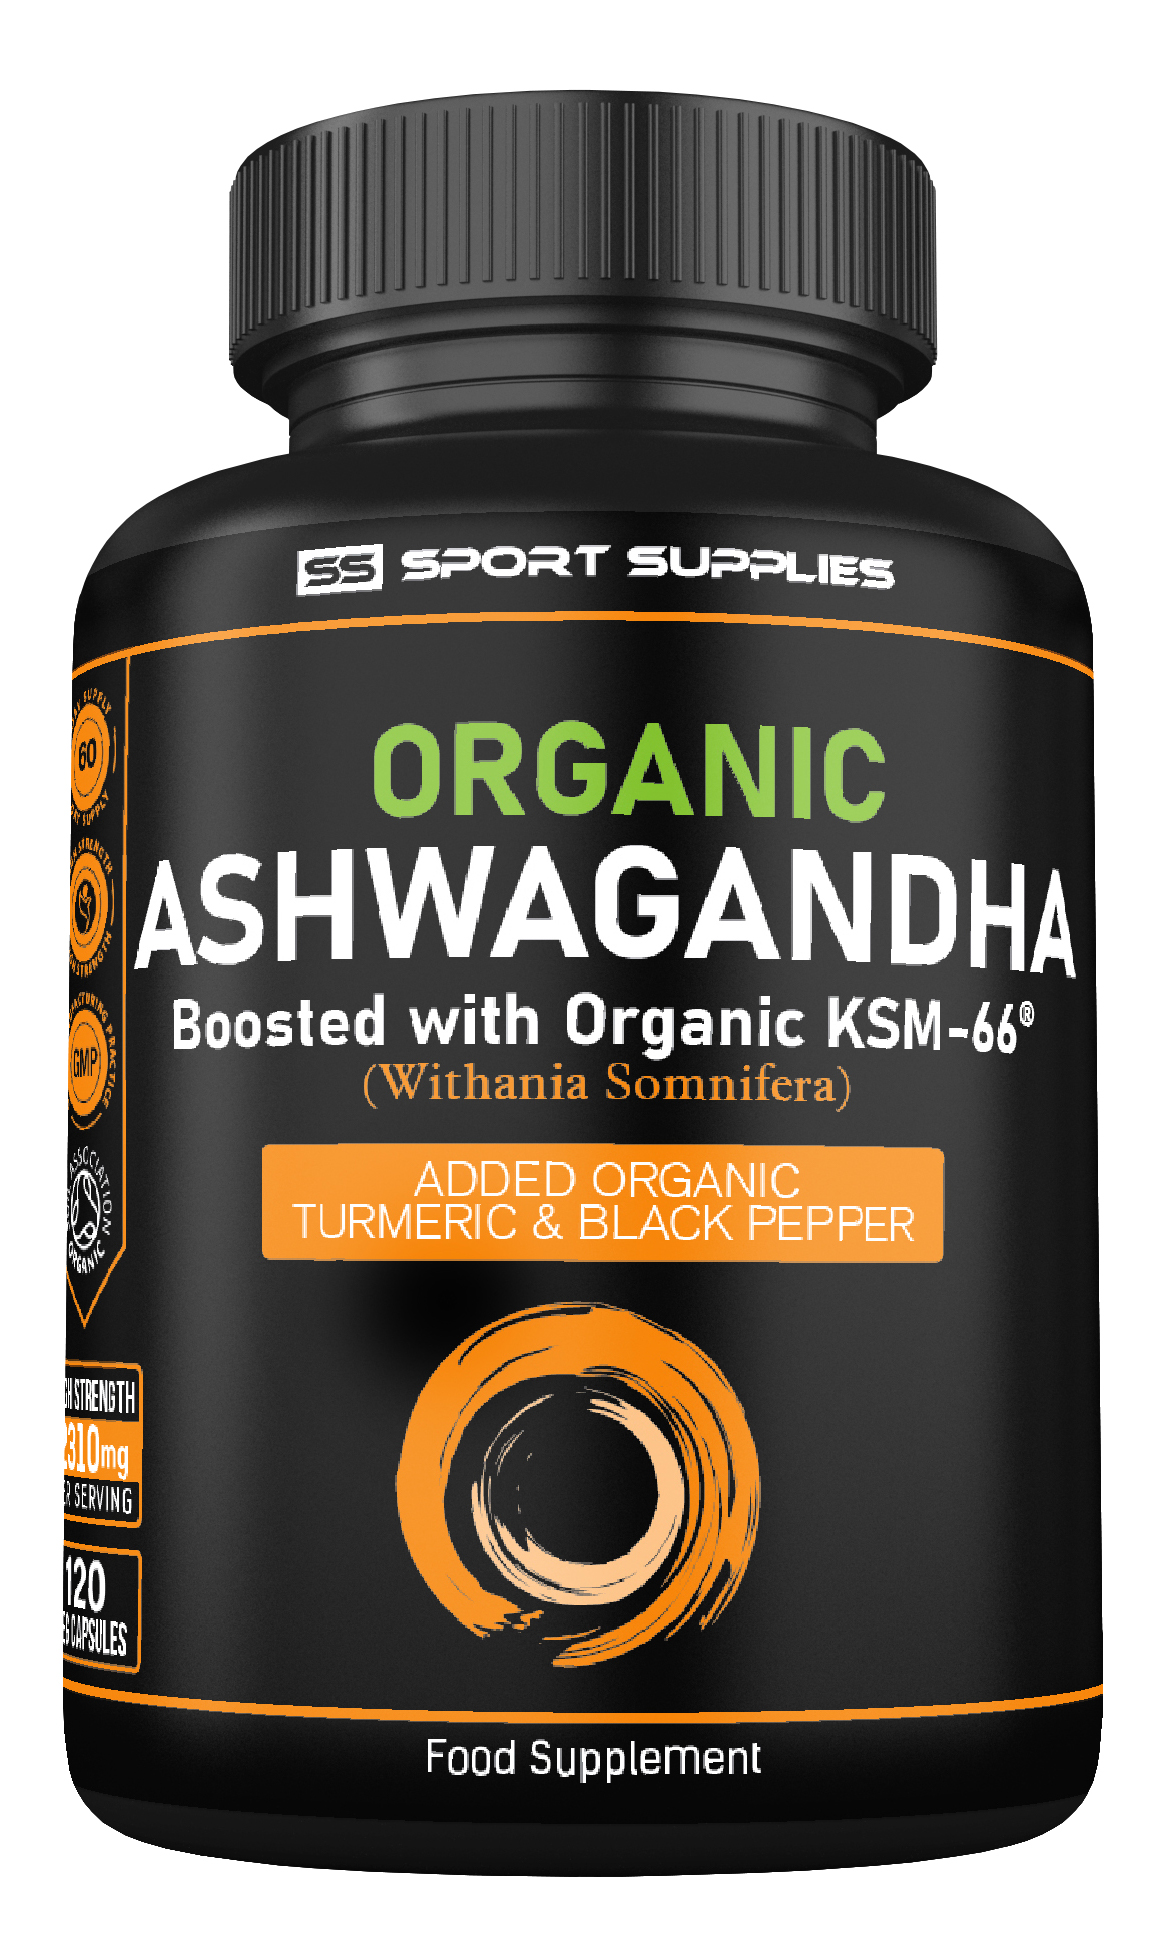 Organic Ashwagandha with KSM-66, Turmeric and Black Pepper - 120 Capsules - 1600mg